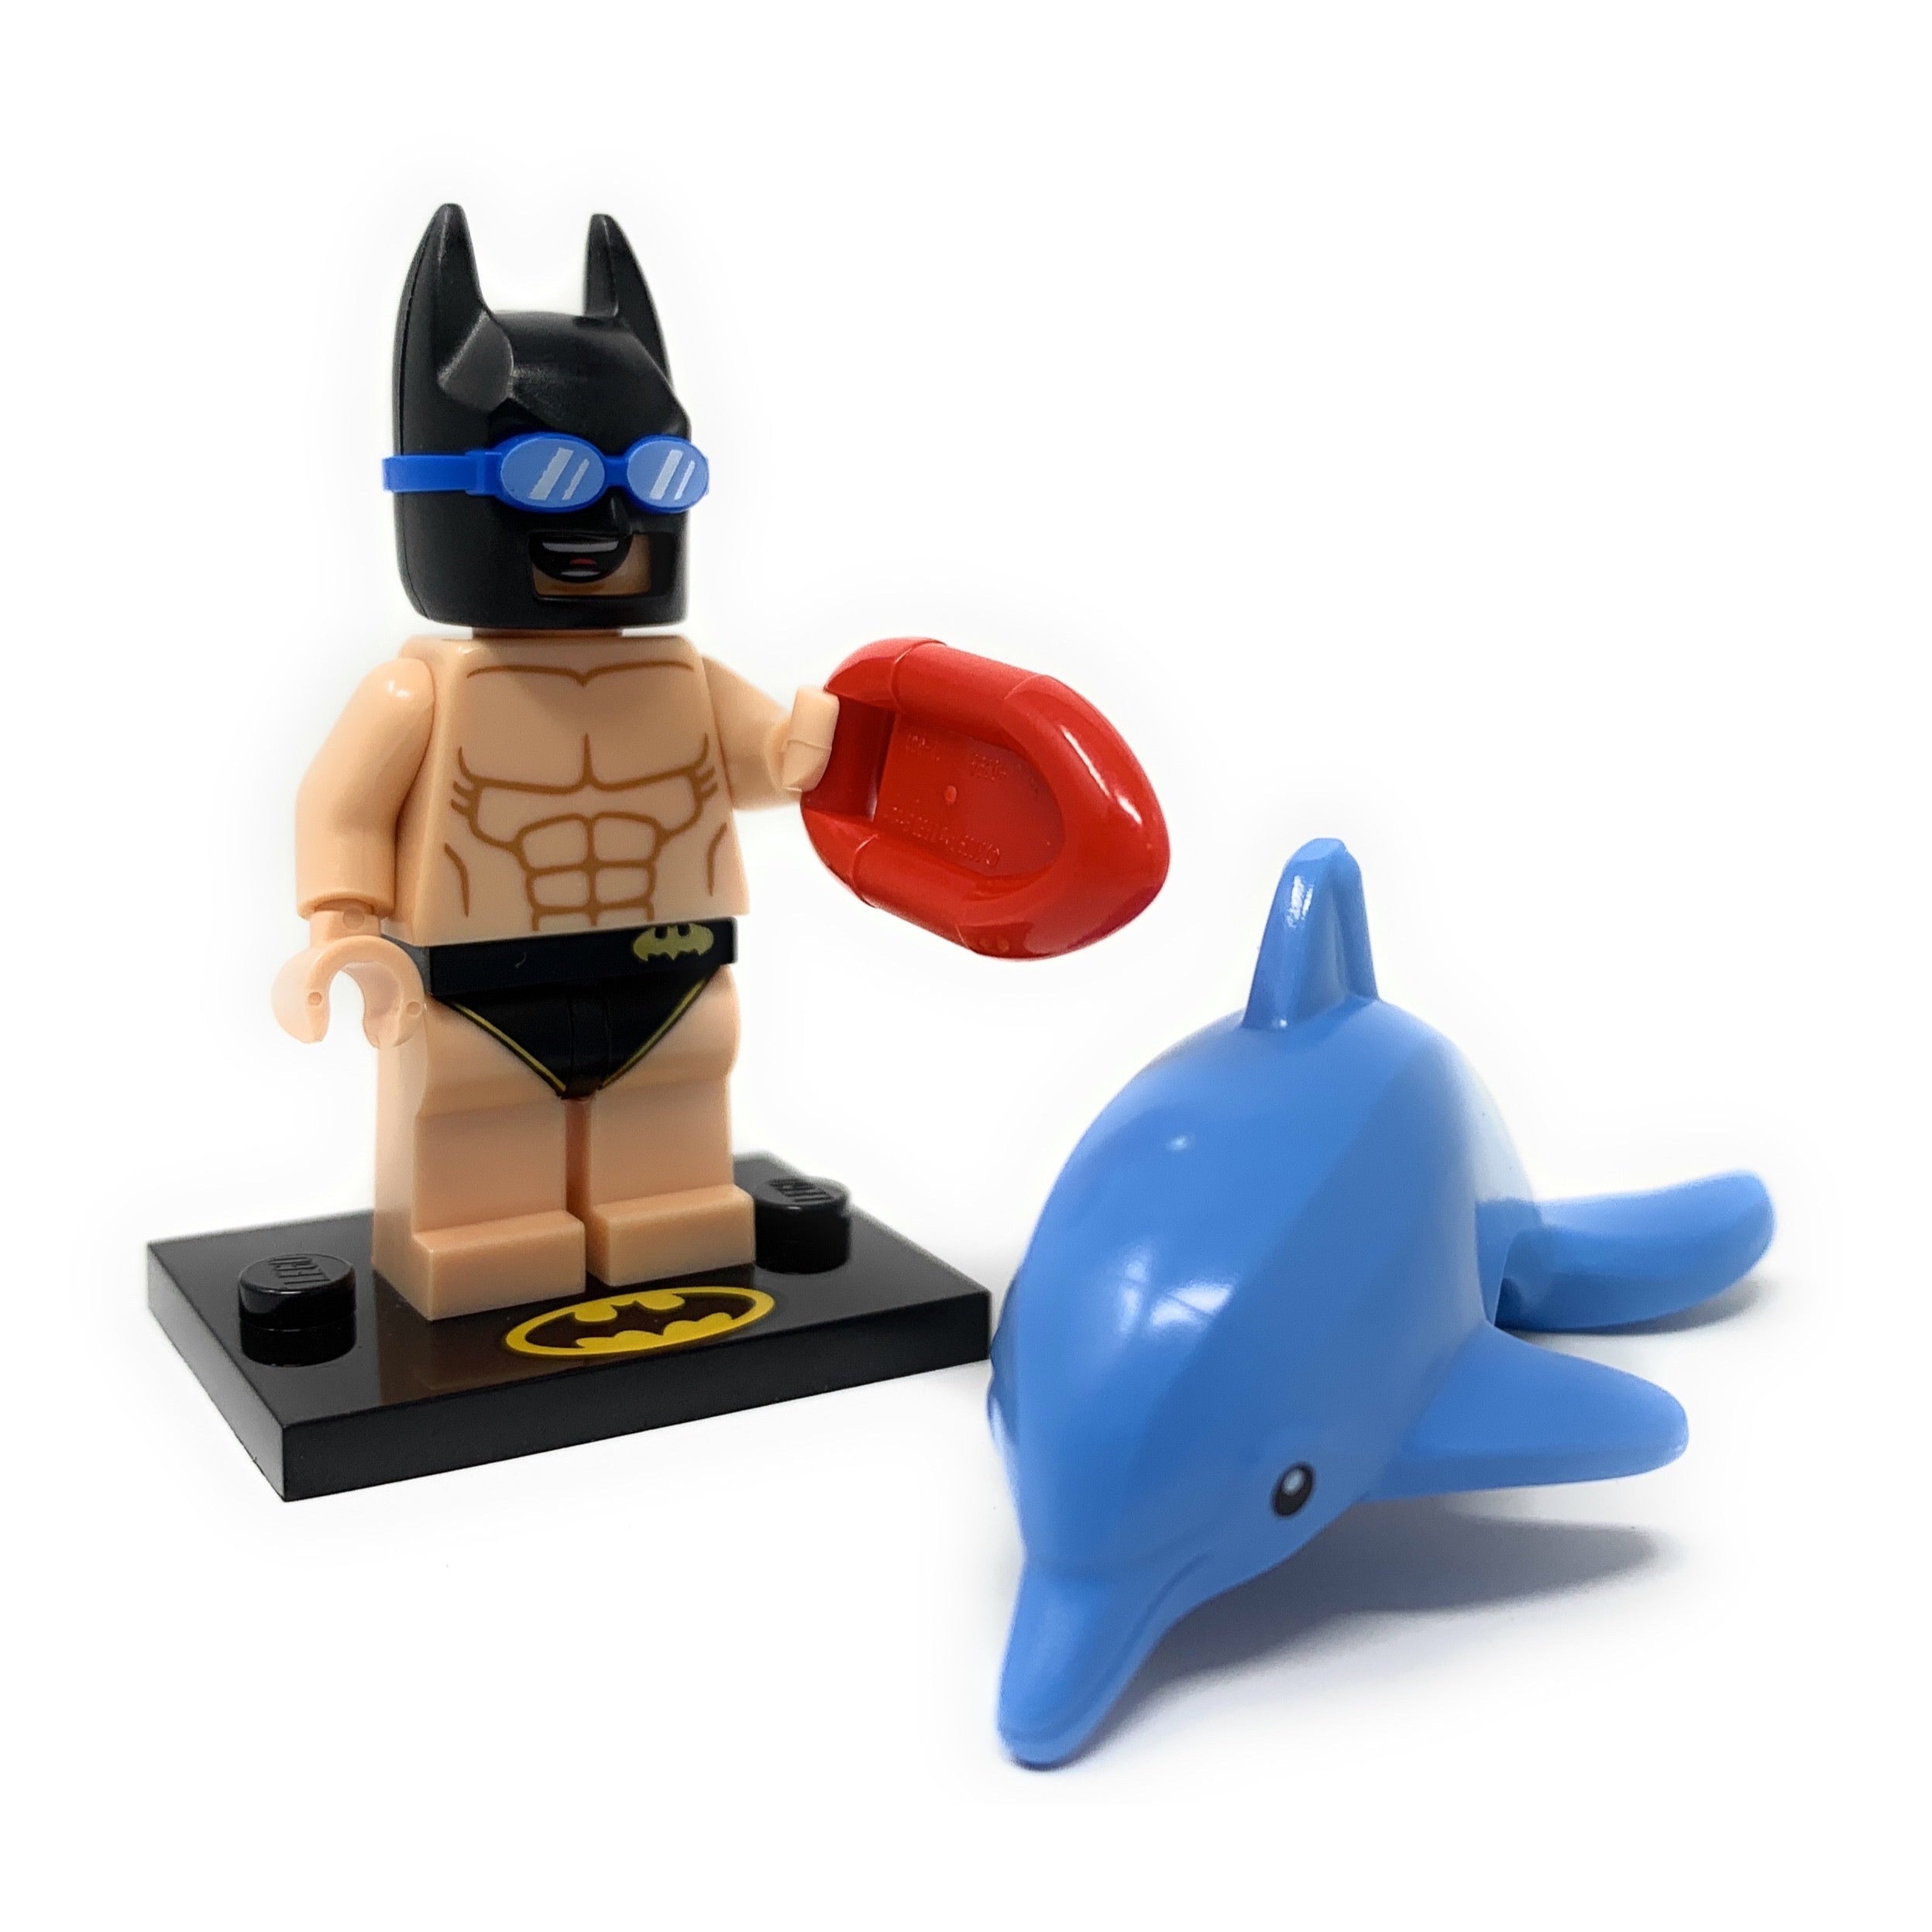 Swimming Pool Batman - Series 2 LEGO Batman Movie Collectible Minifigure (2018)